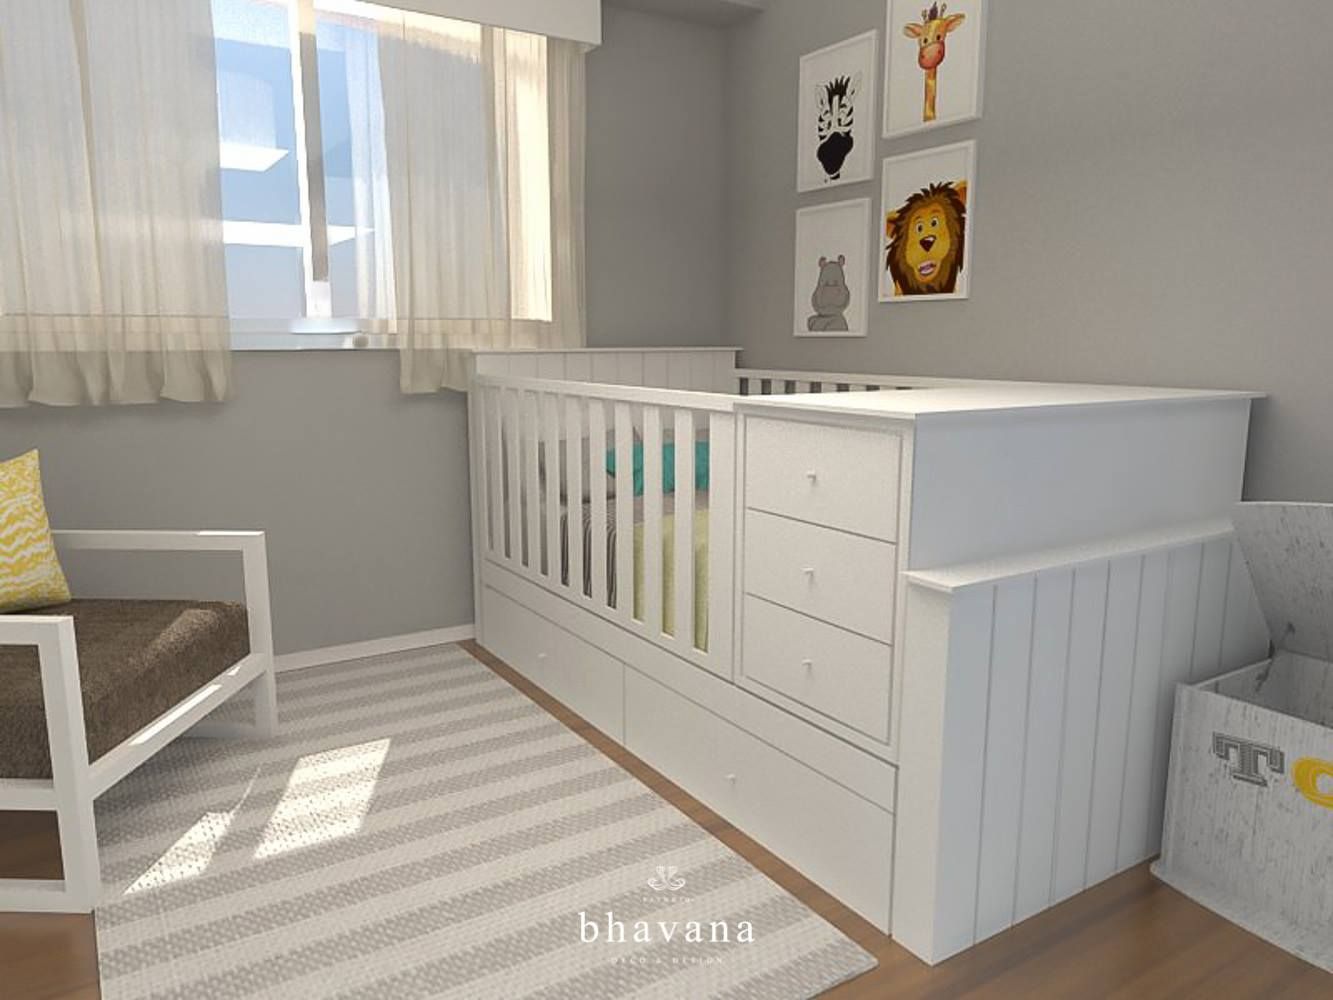 Obra Blanco Encalada - Diseño Habitación Infantil, Bhavana Bhavana Nursery/kid’s room